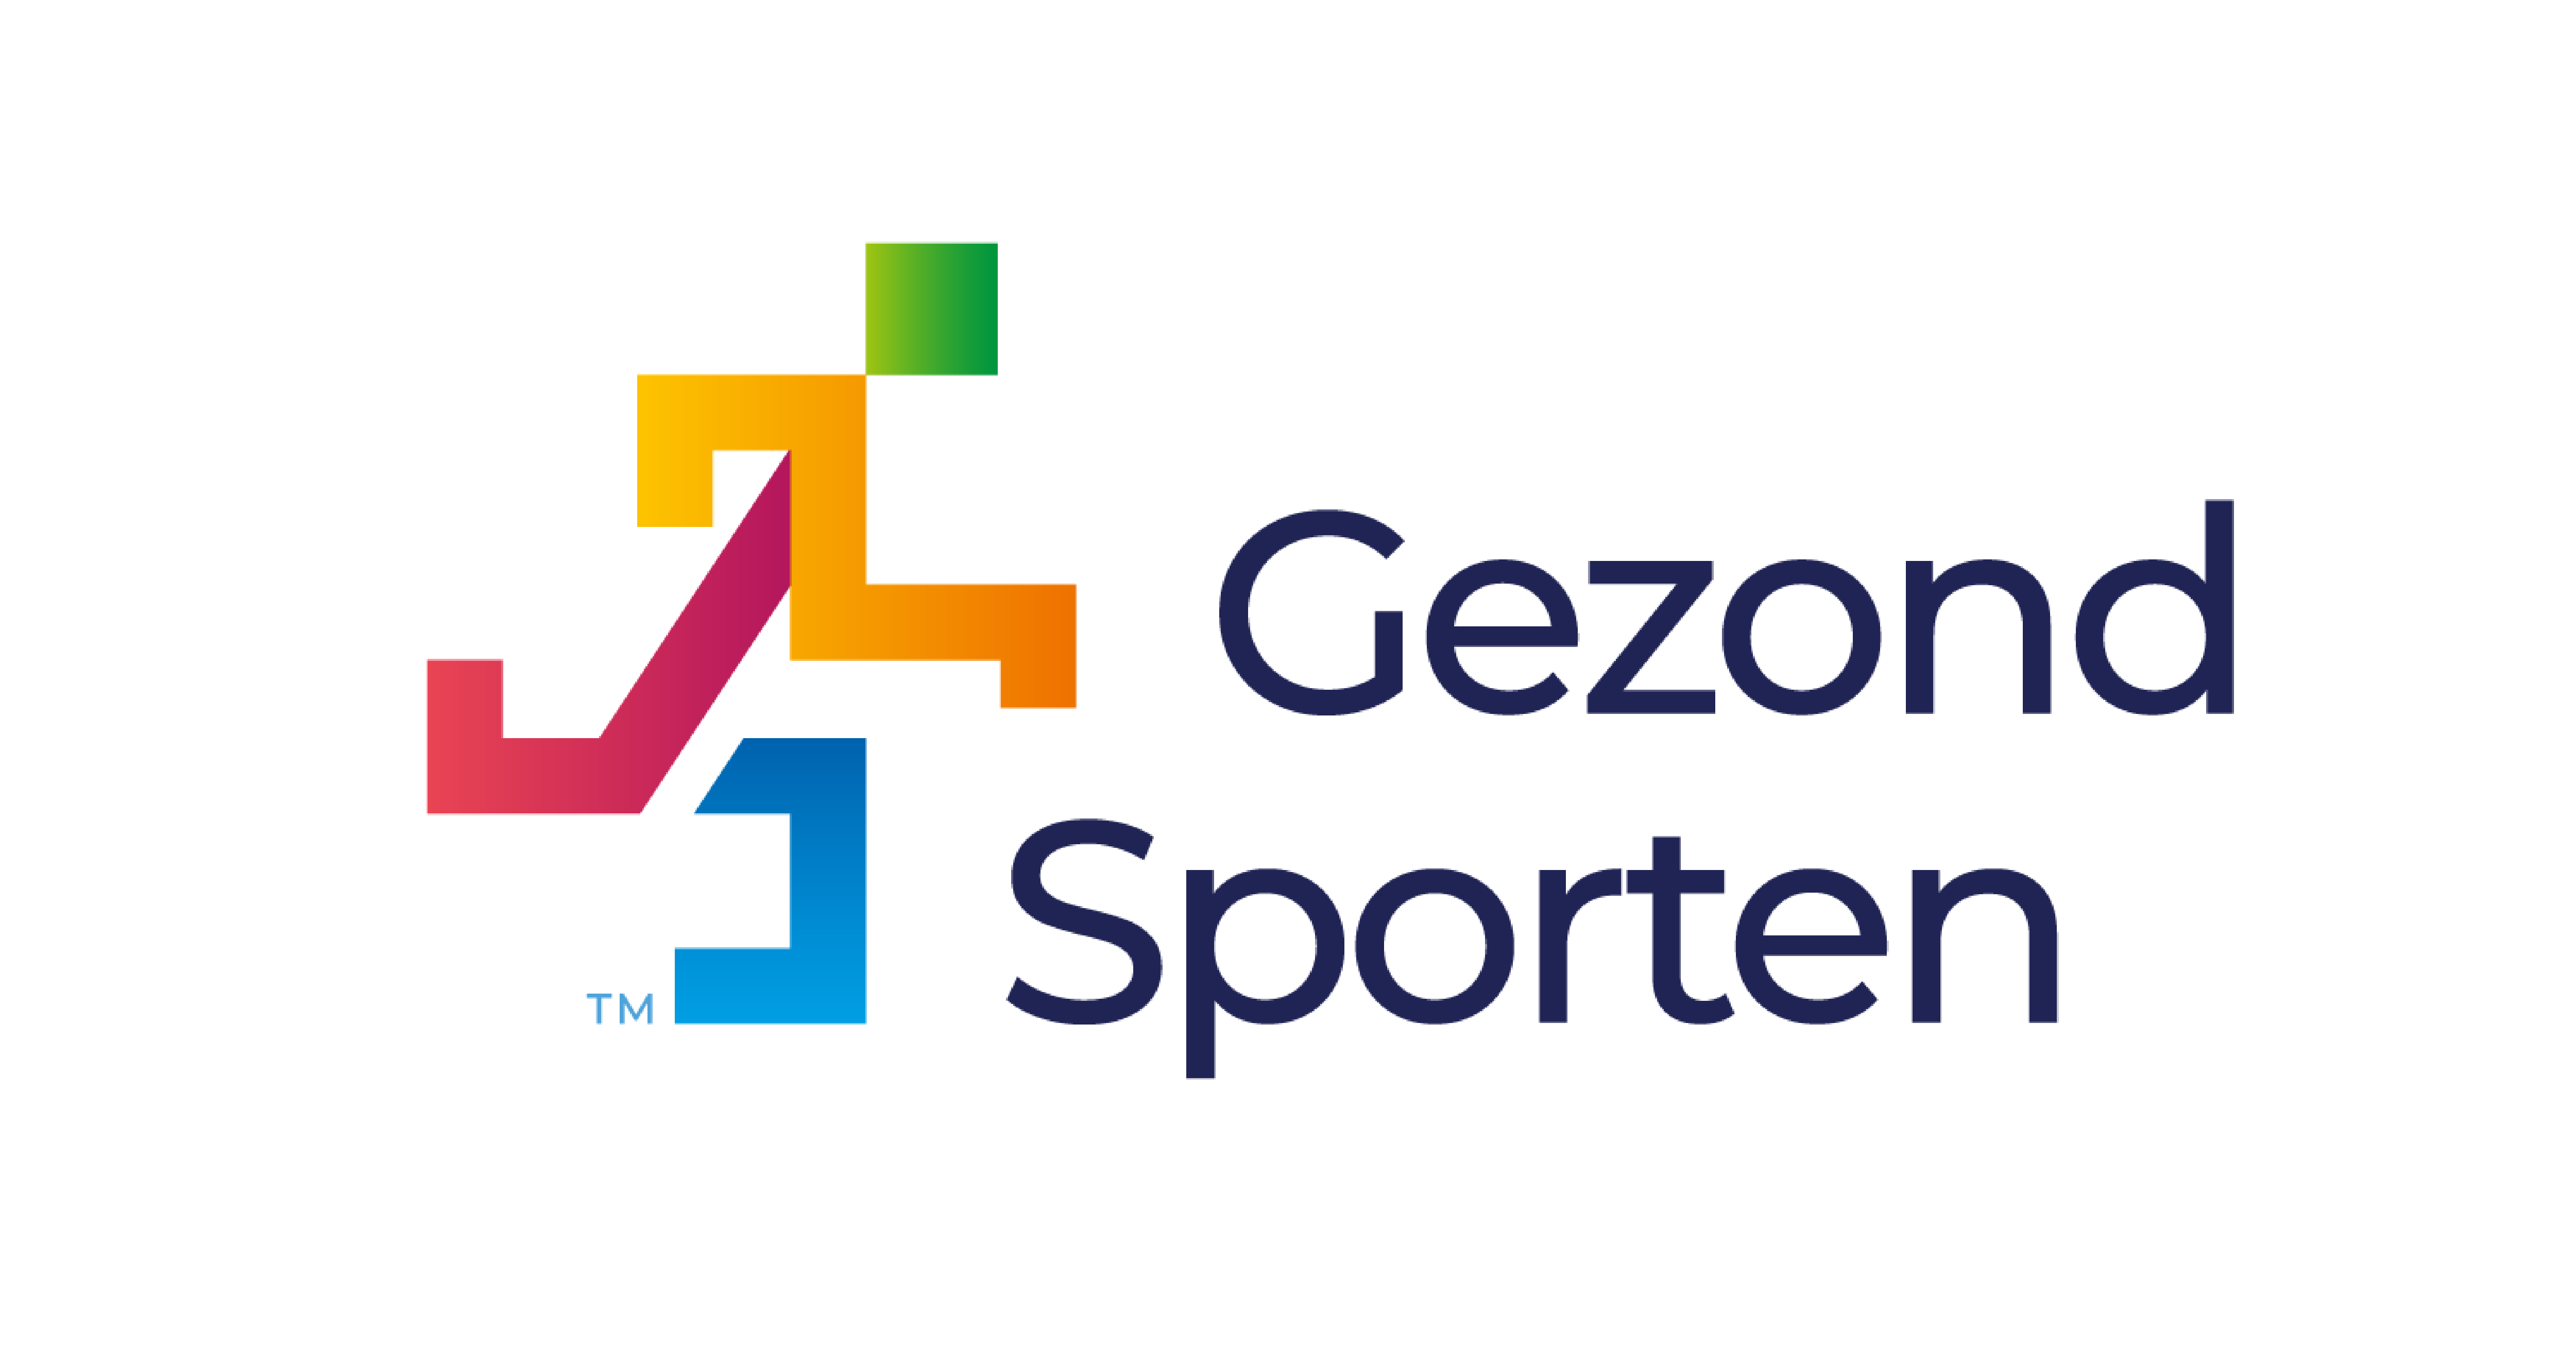 Gezond Sporten logo